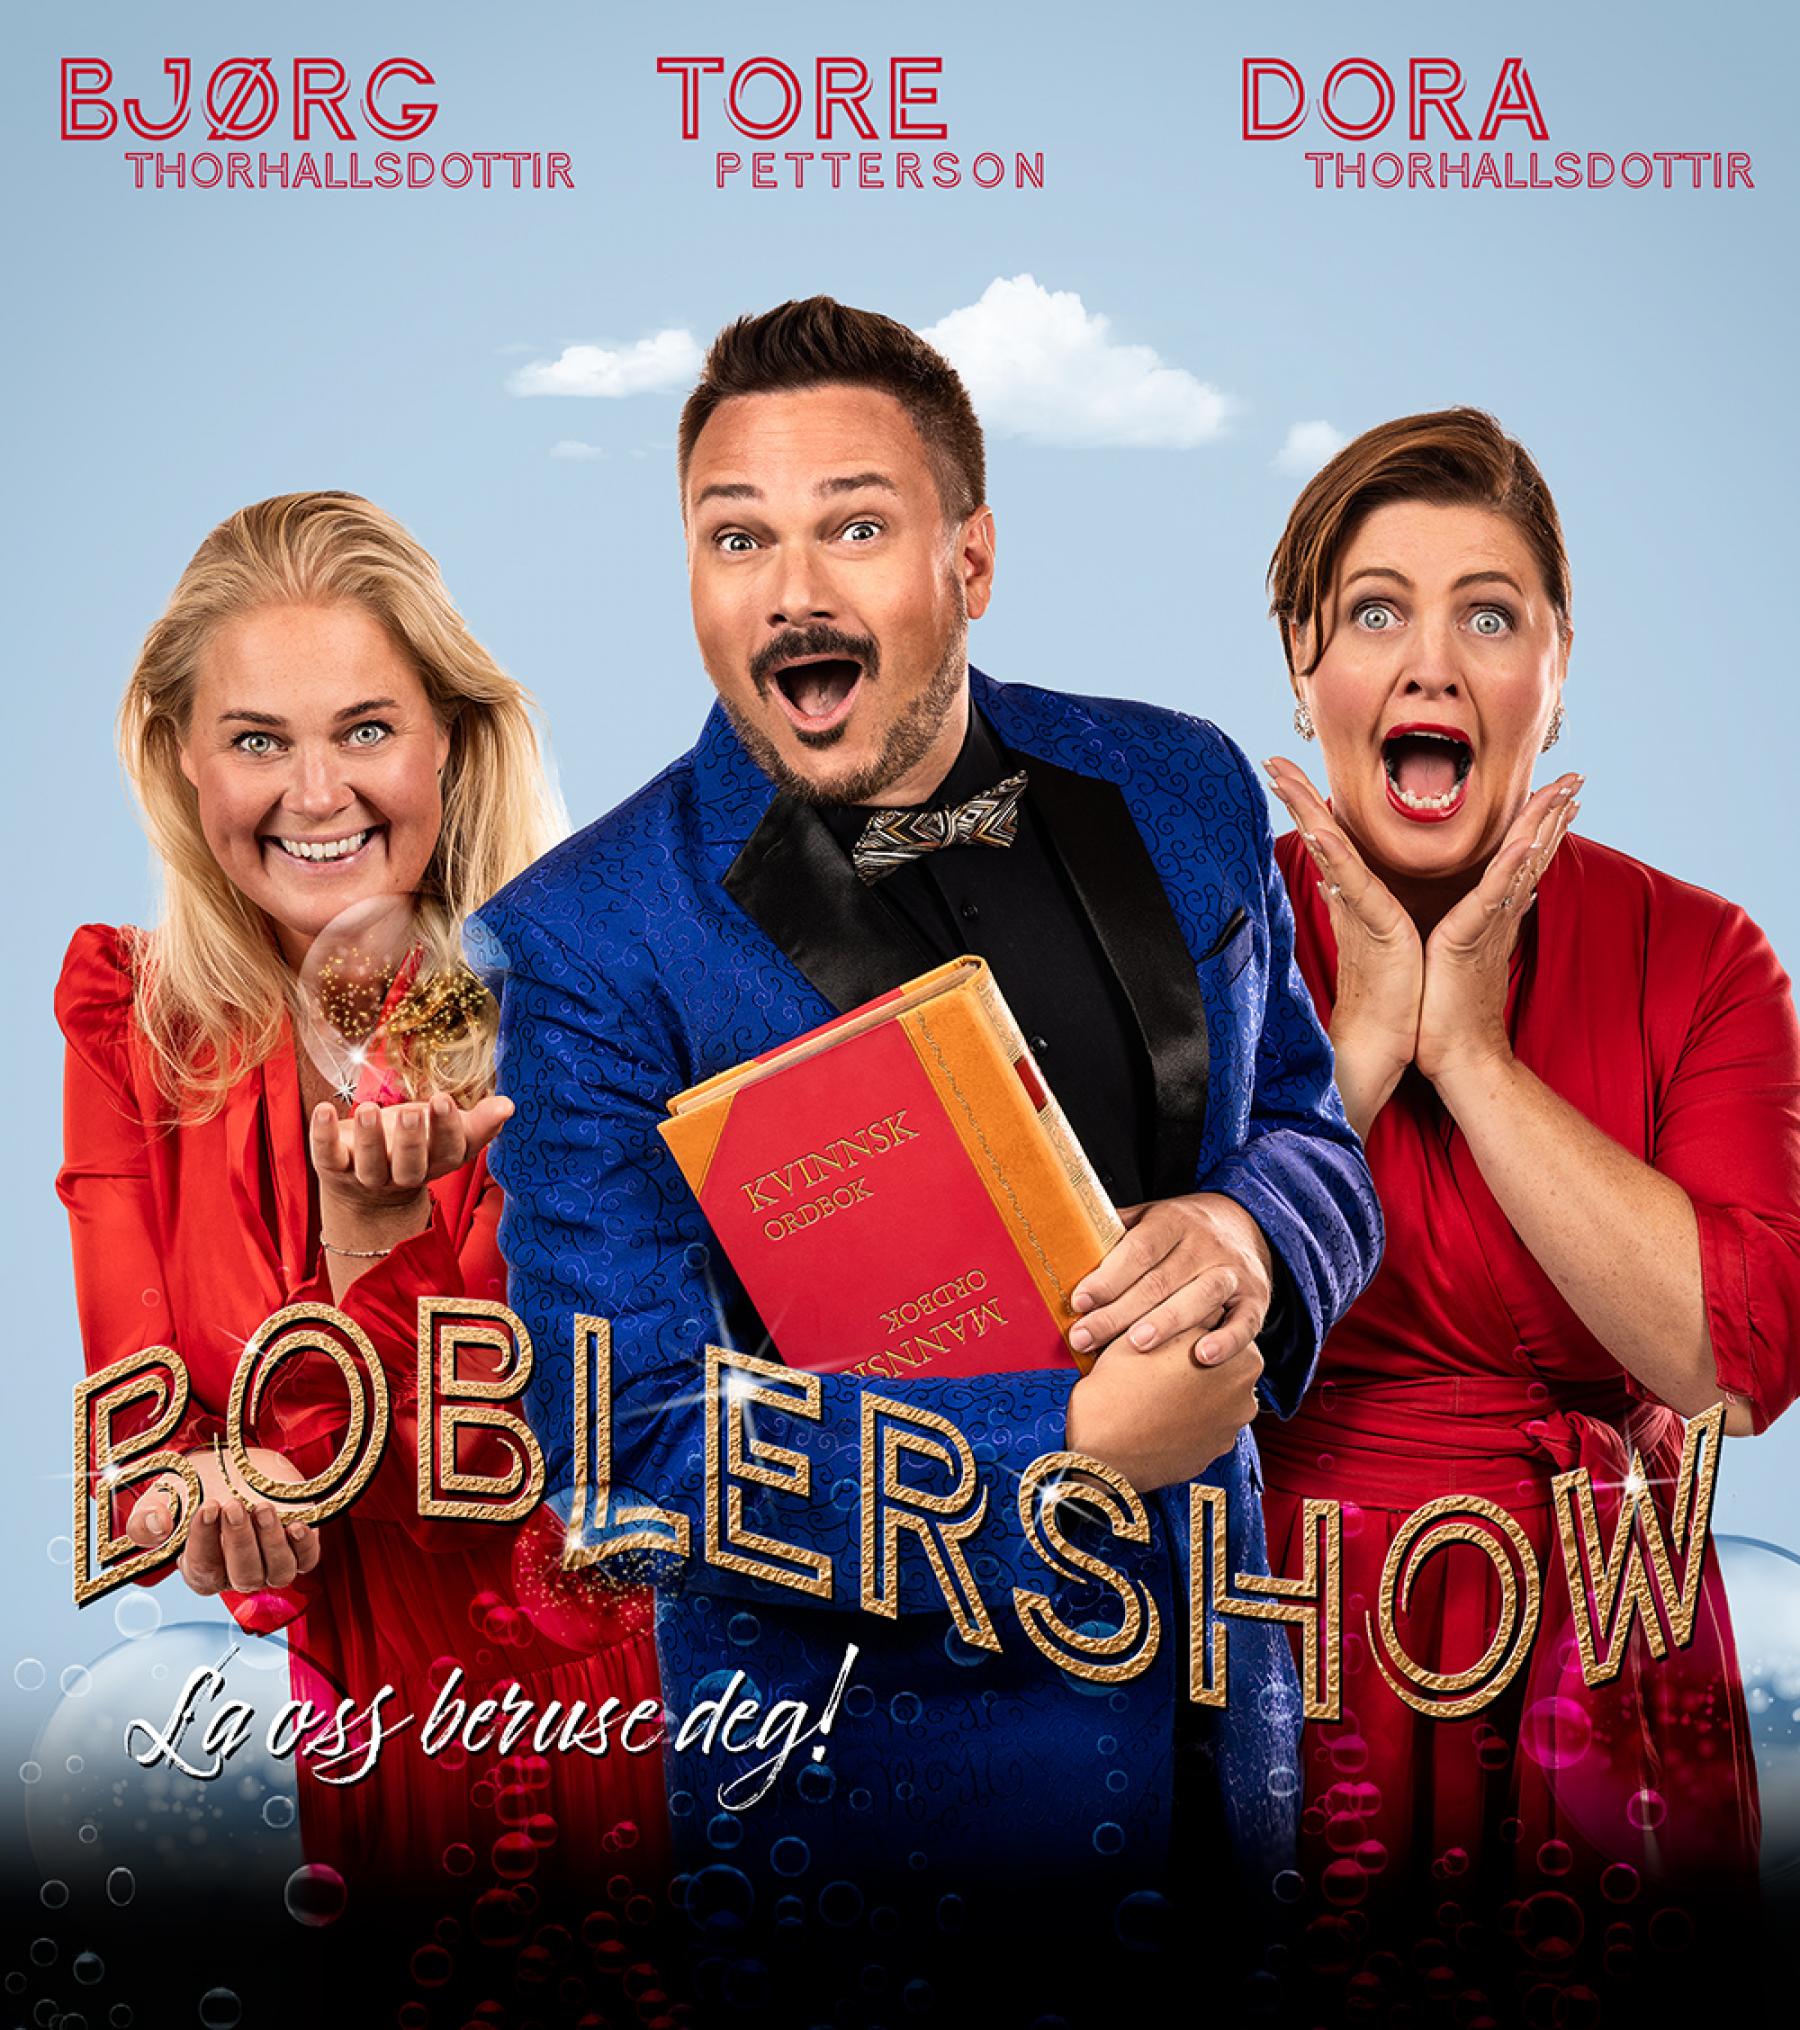 Plakat Boblershow